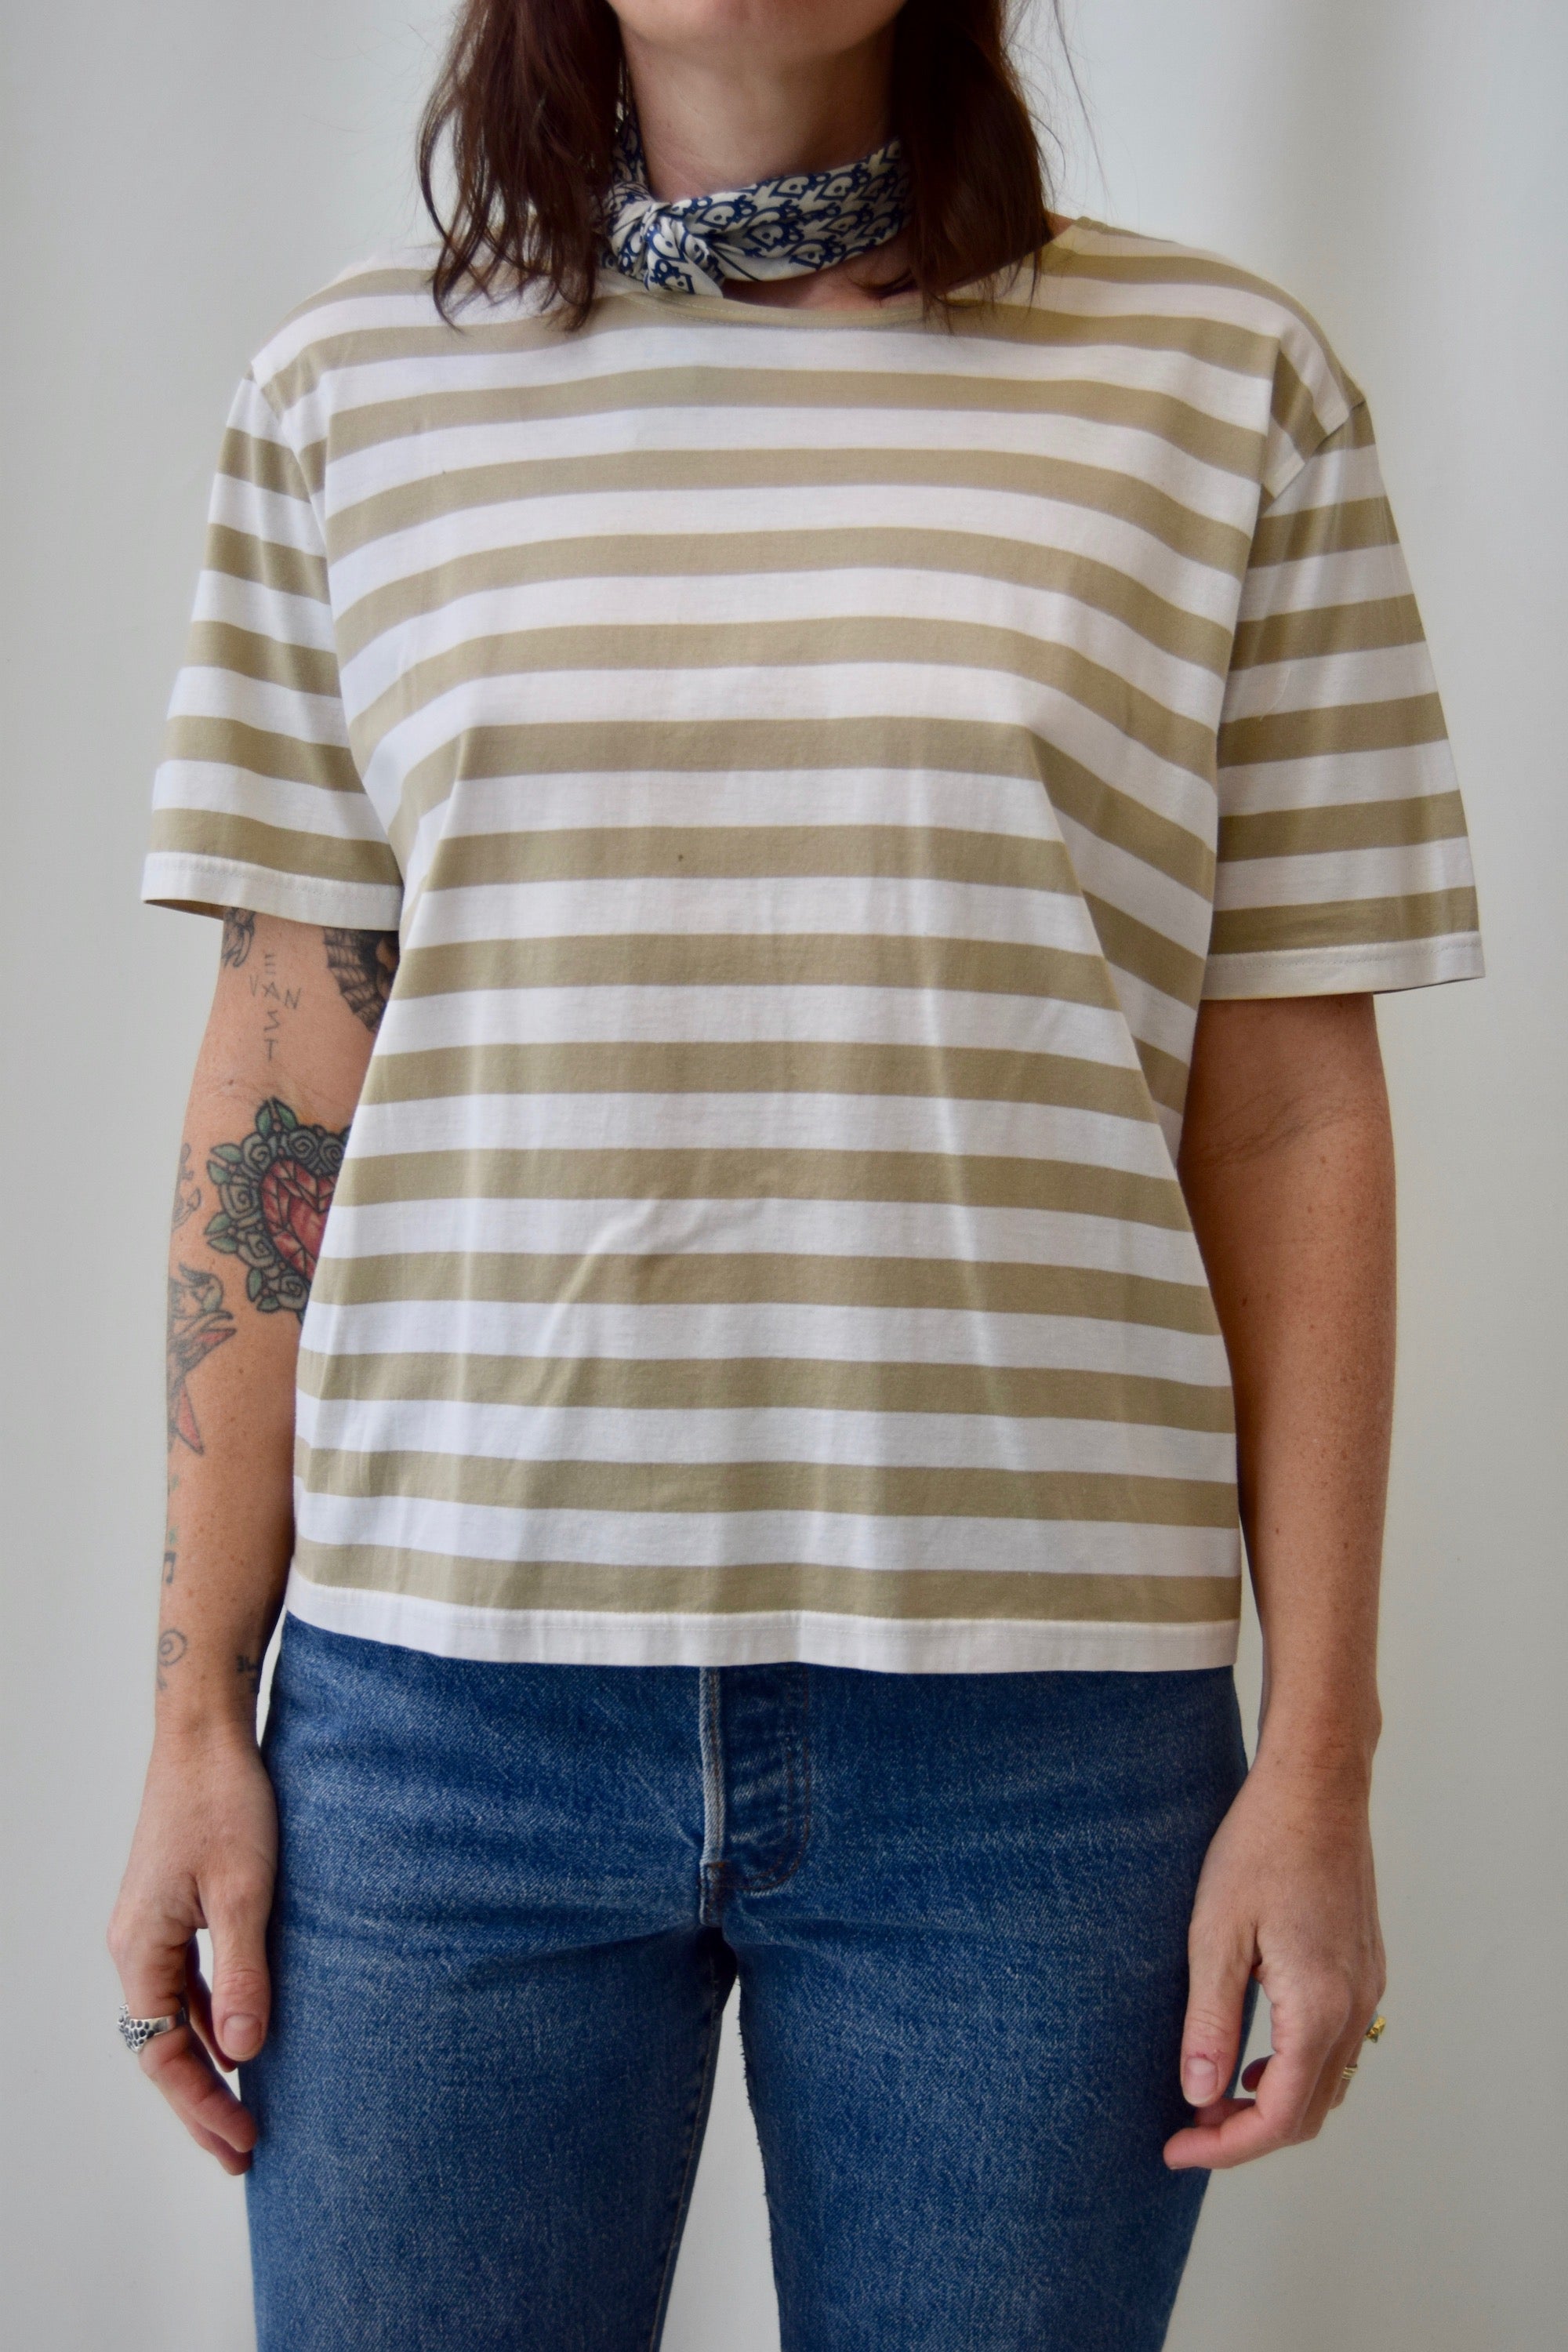 Tan And Cream Striped T-Shirt